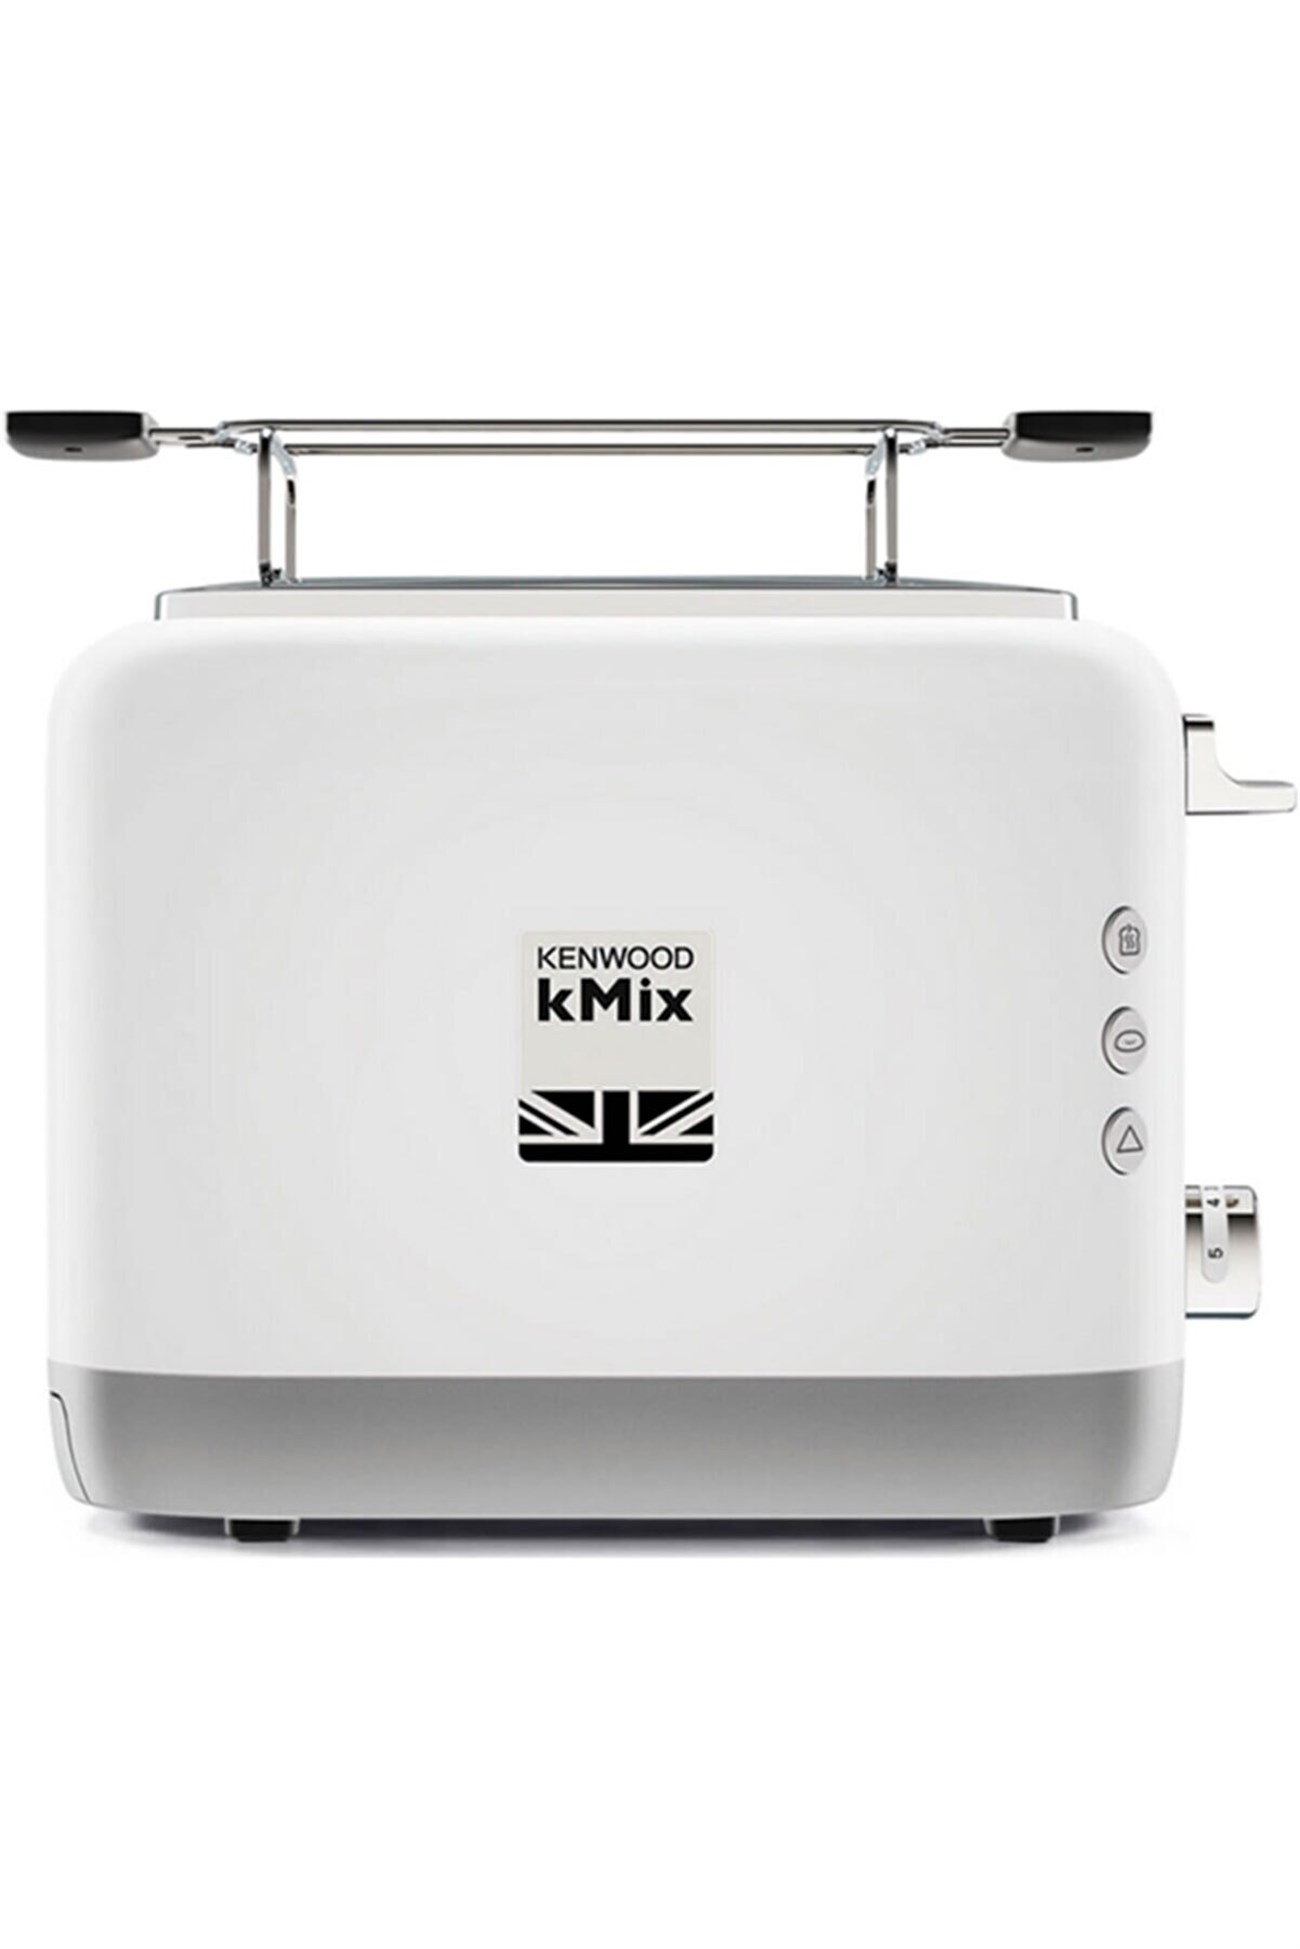 Kenwood TCX751WH Kmix Ekmek Kızartma Makinesi Beyaz